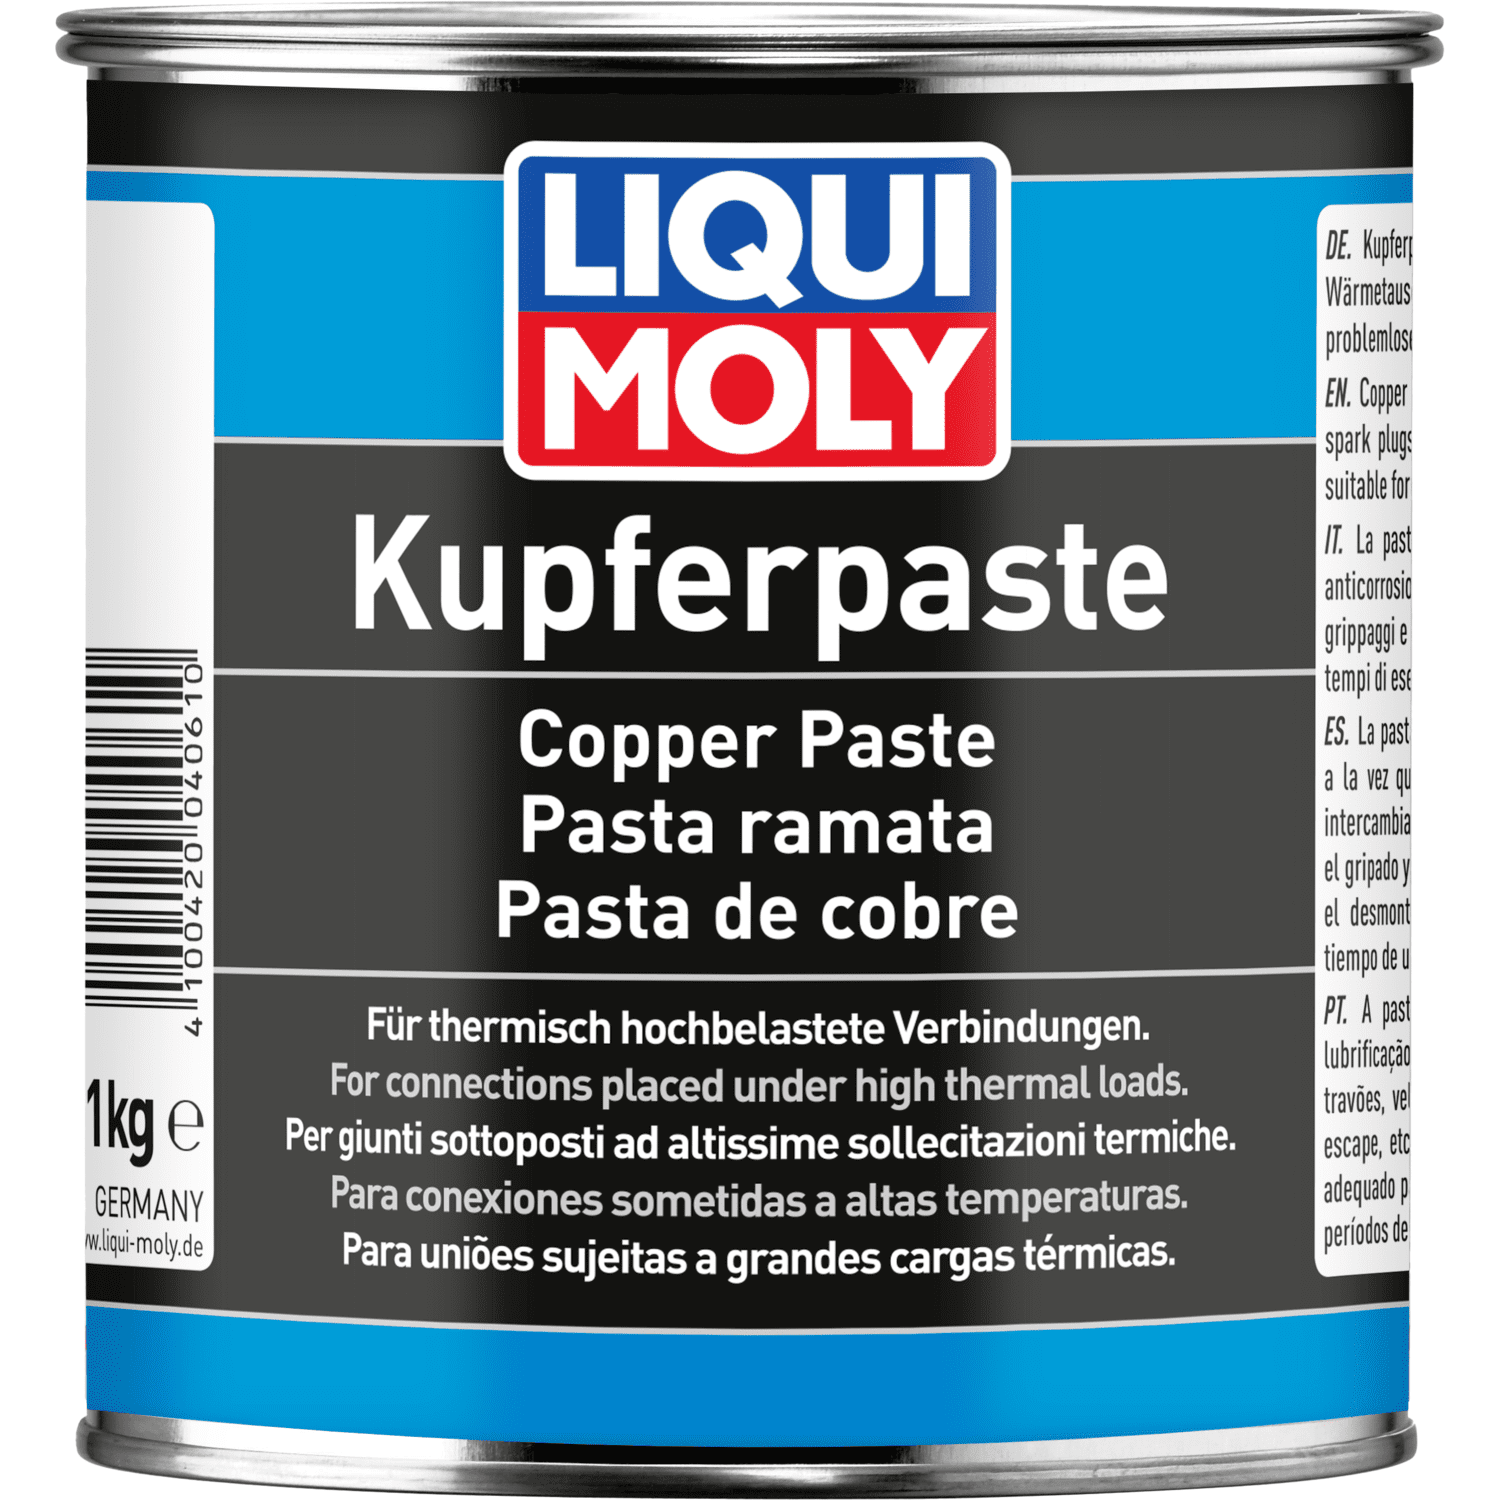 Copper Paste LIQUI MOLY